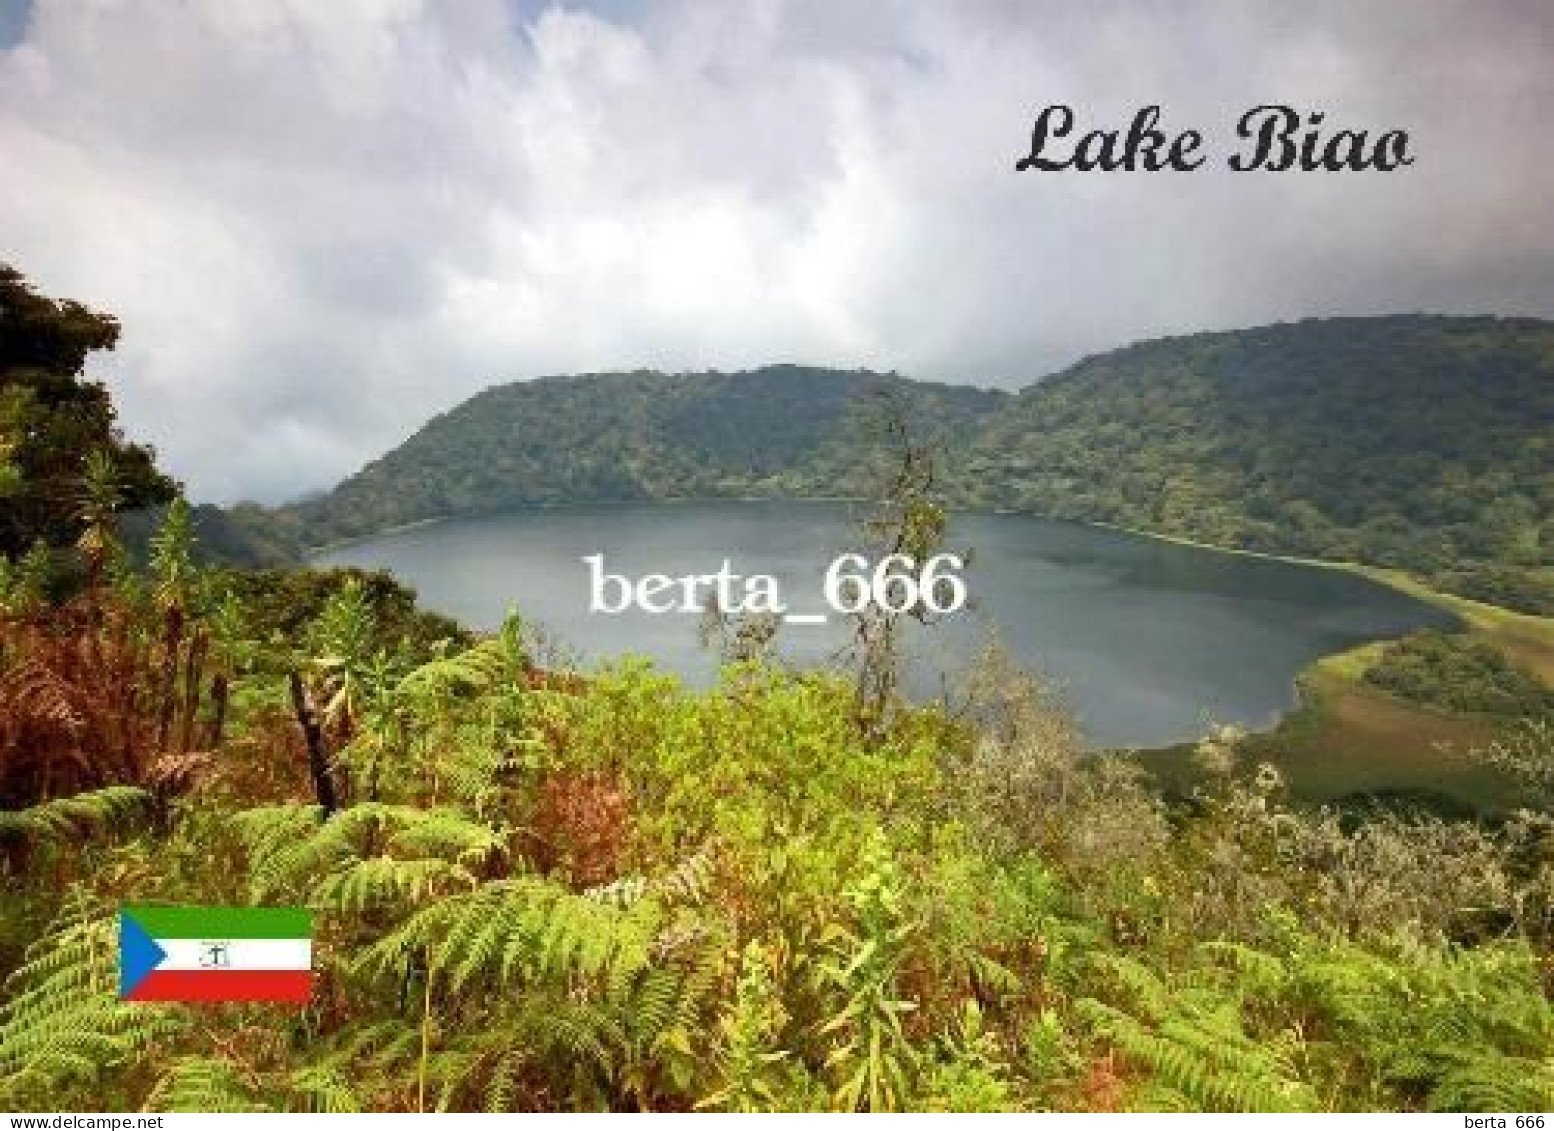 Equatorial Guinea Lake Biao Crater Lake New Postcard - Equatorial Guinea